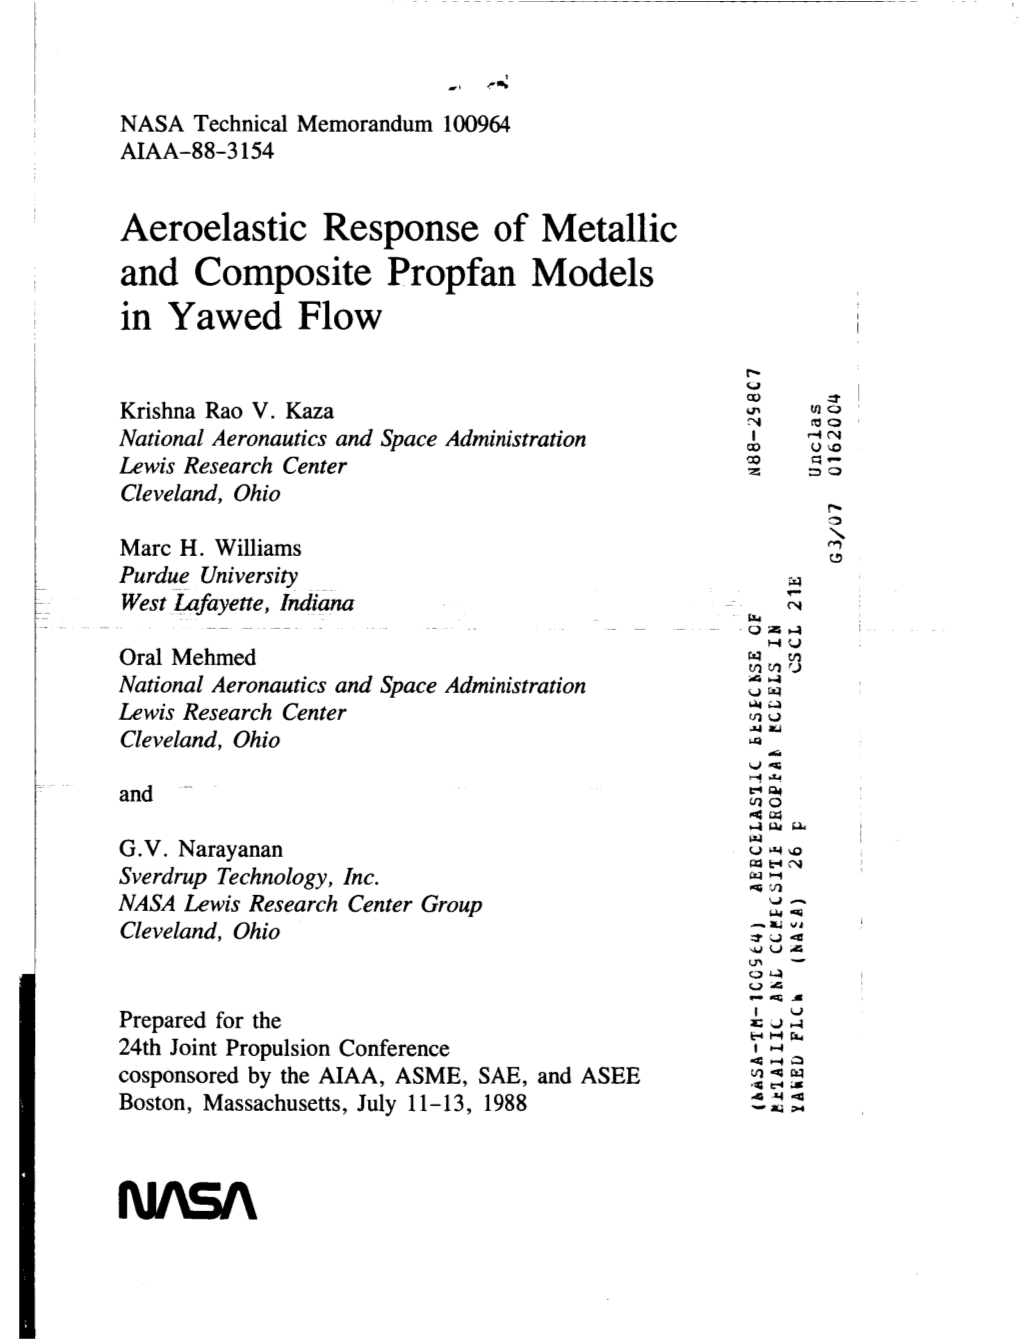 Aeroelastic Response of Metallic and Composite Propfan Models in Yawed Flow